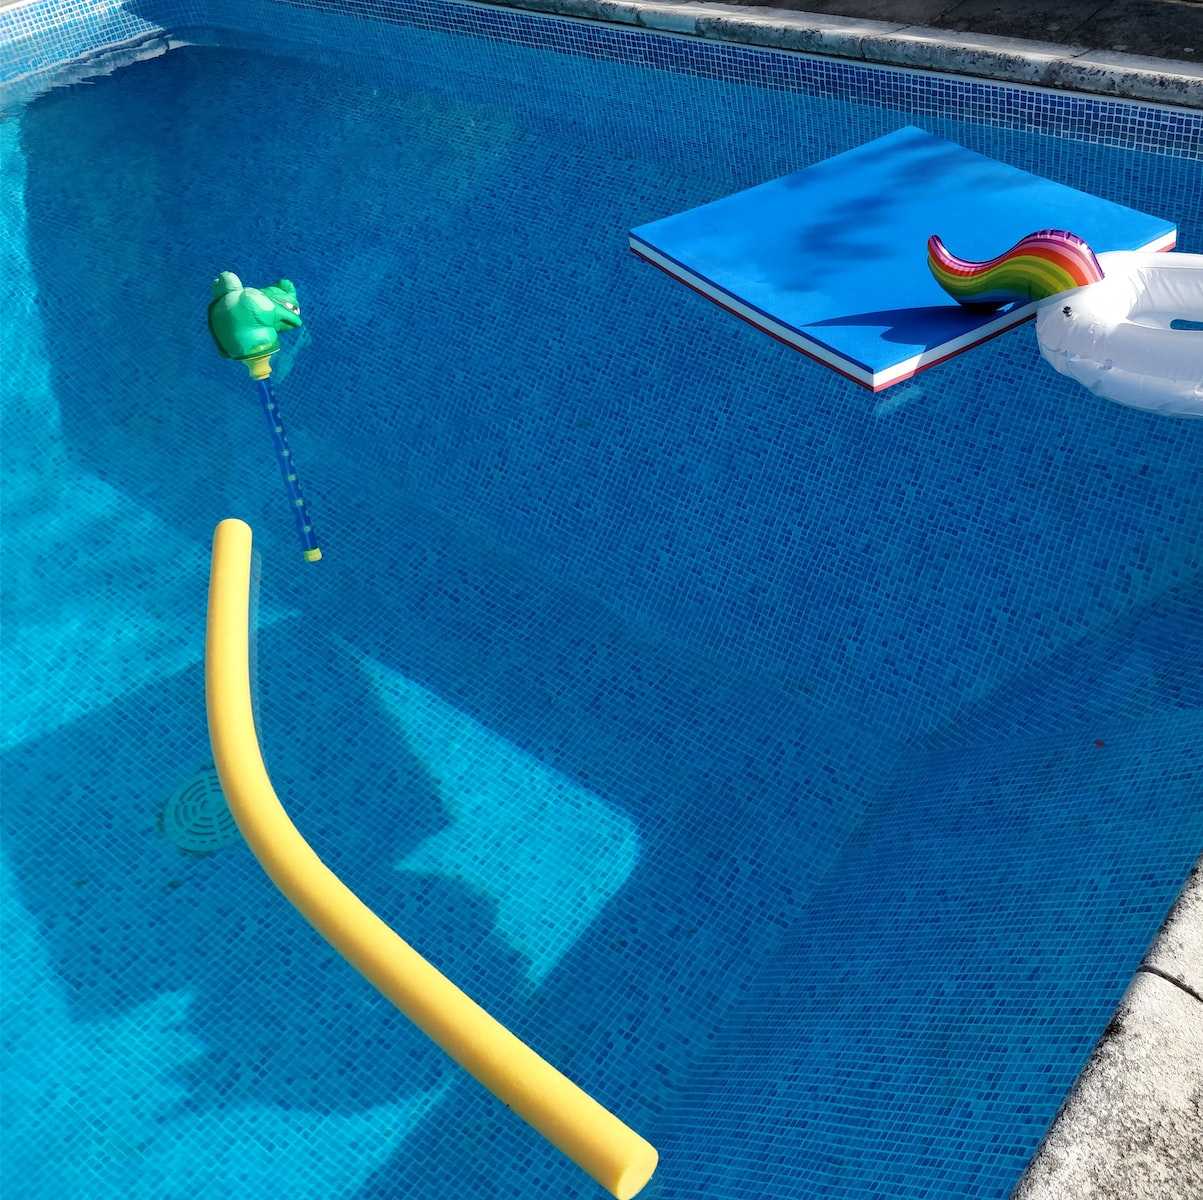 unicorn floater in water pool